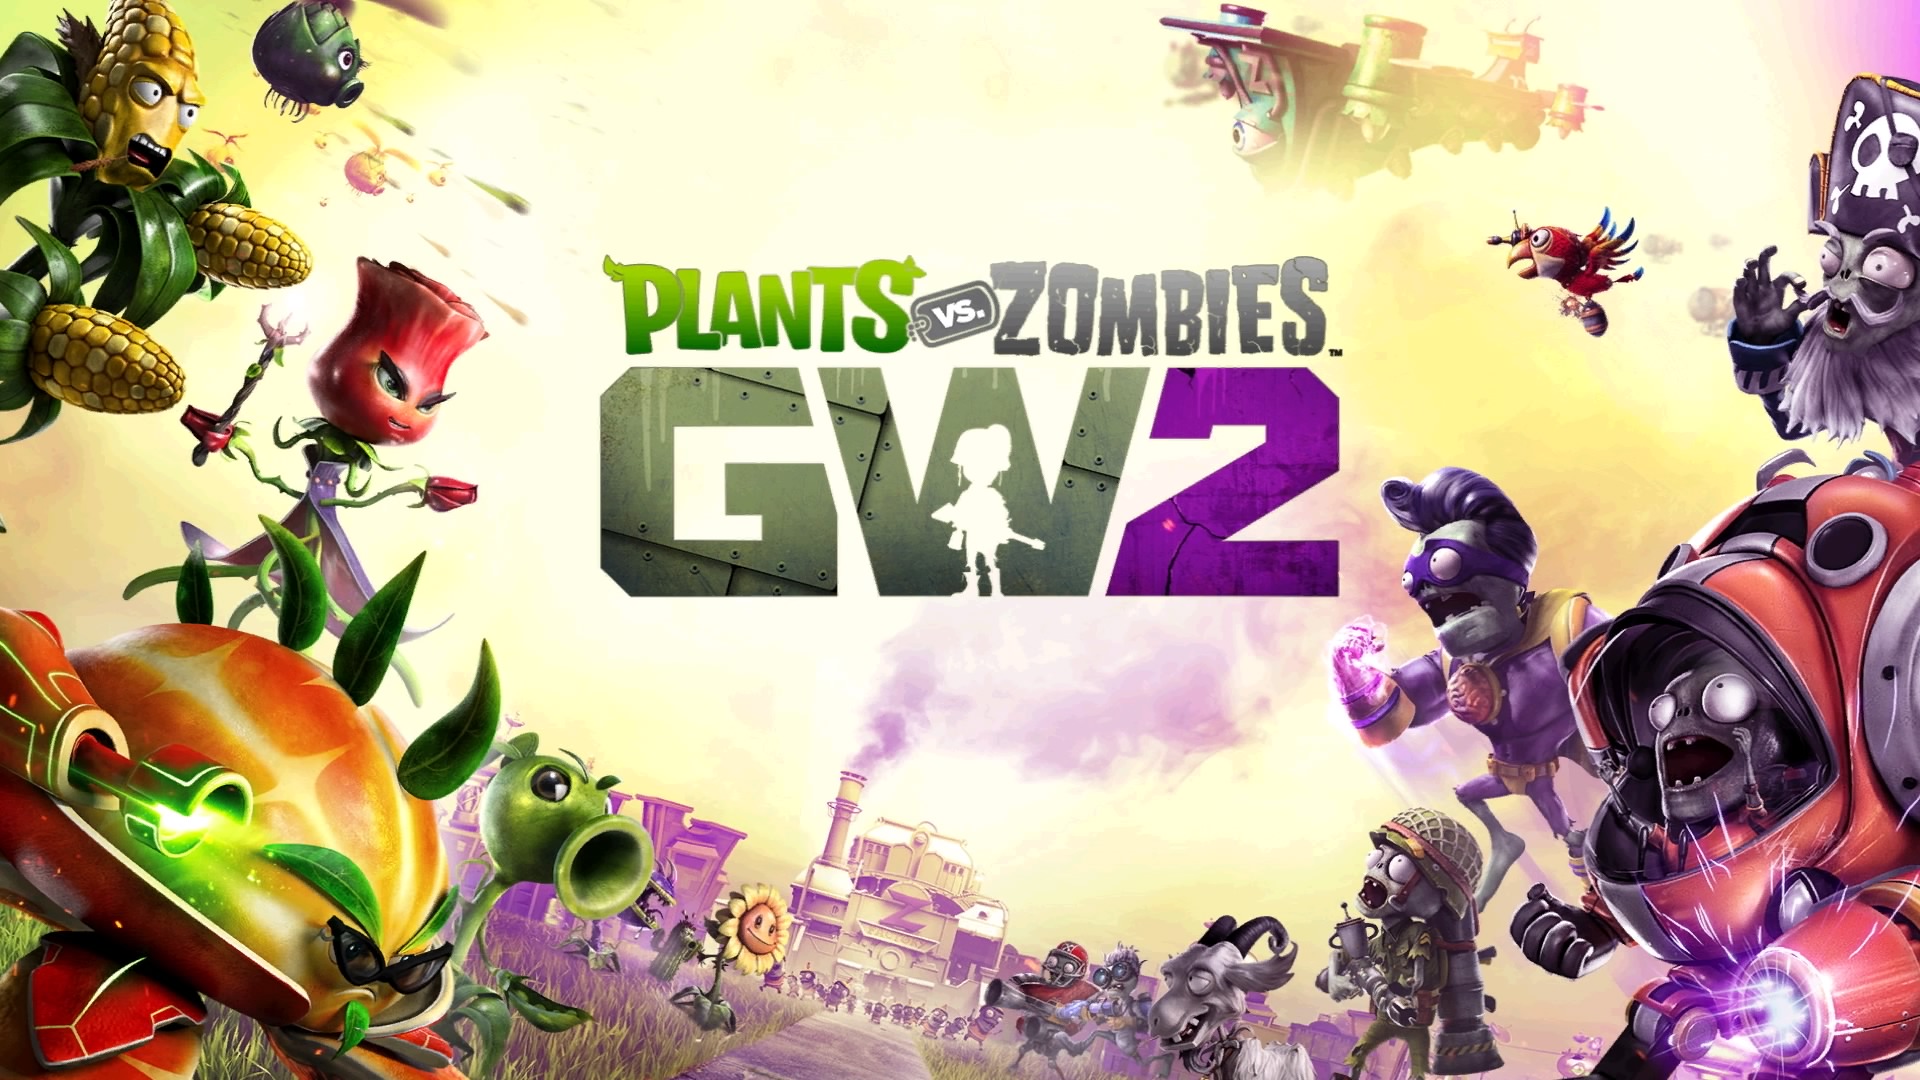 Next plants vs zombies garden warfare dlc